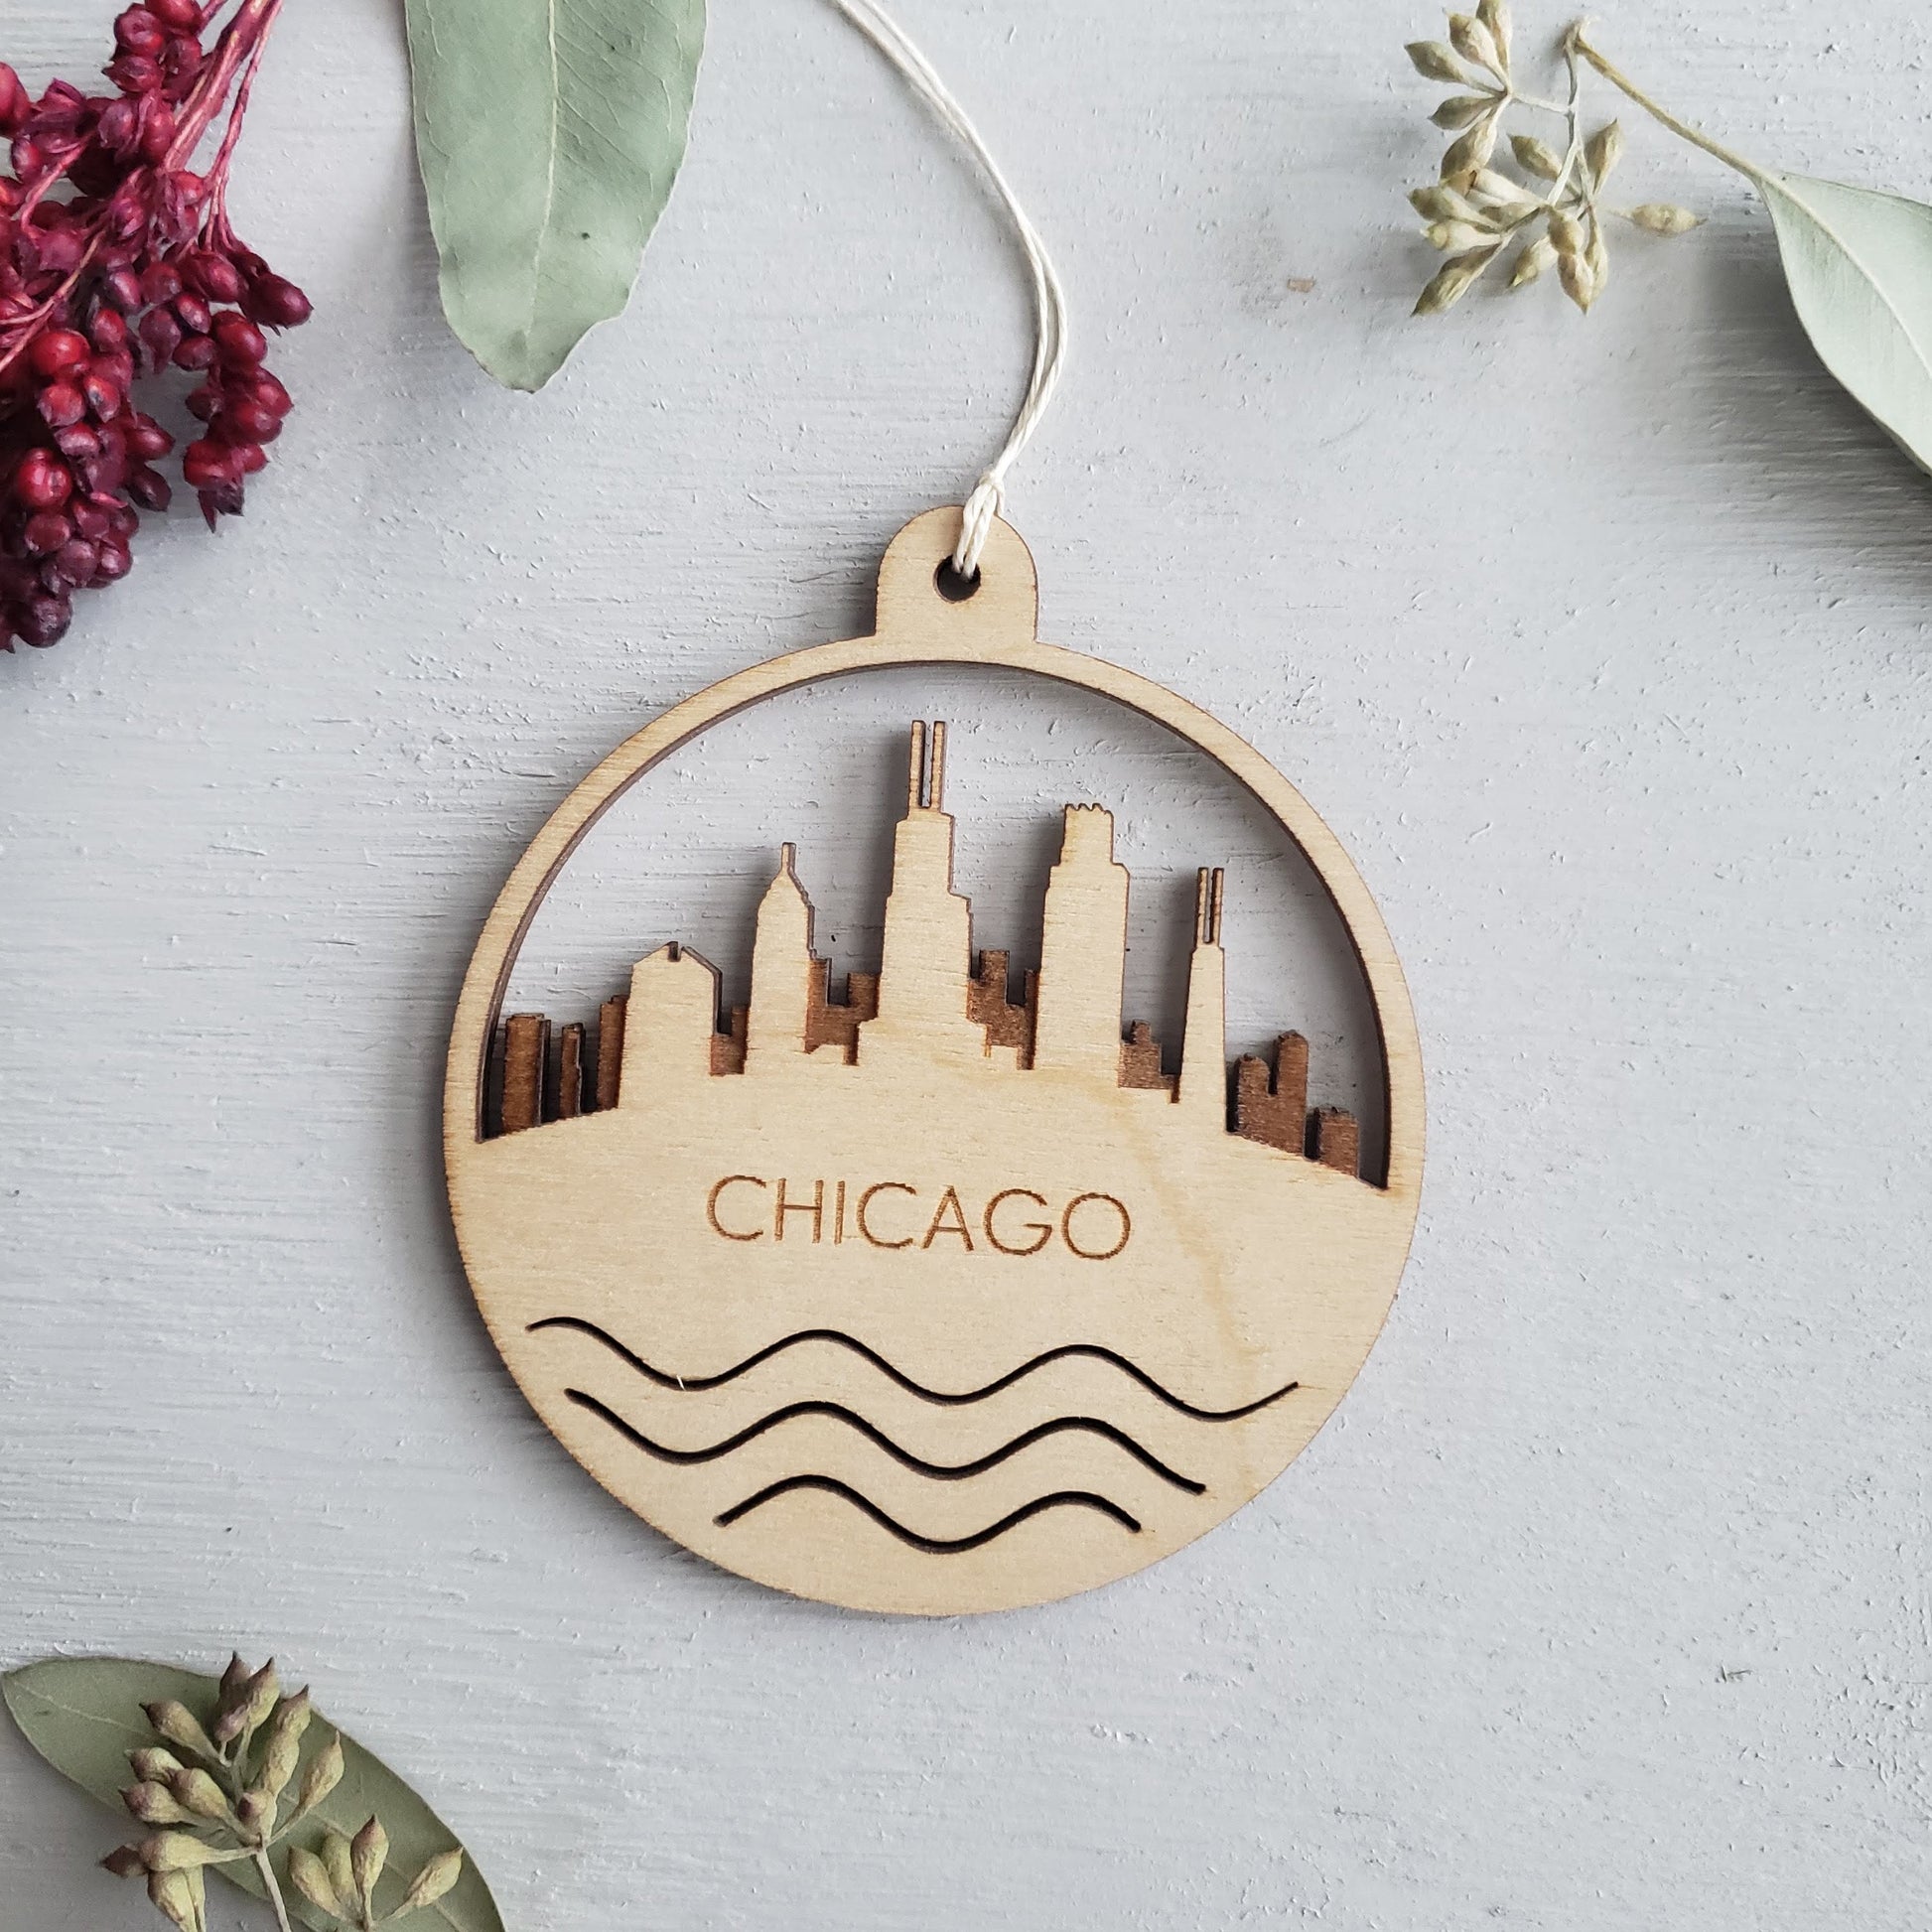 Chicago Skyline Christmas Ornament - Wood ornaments - Holiday teacher gift